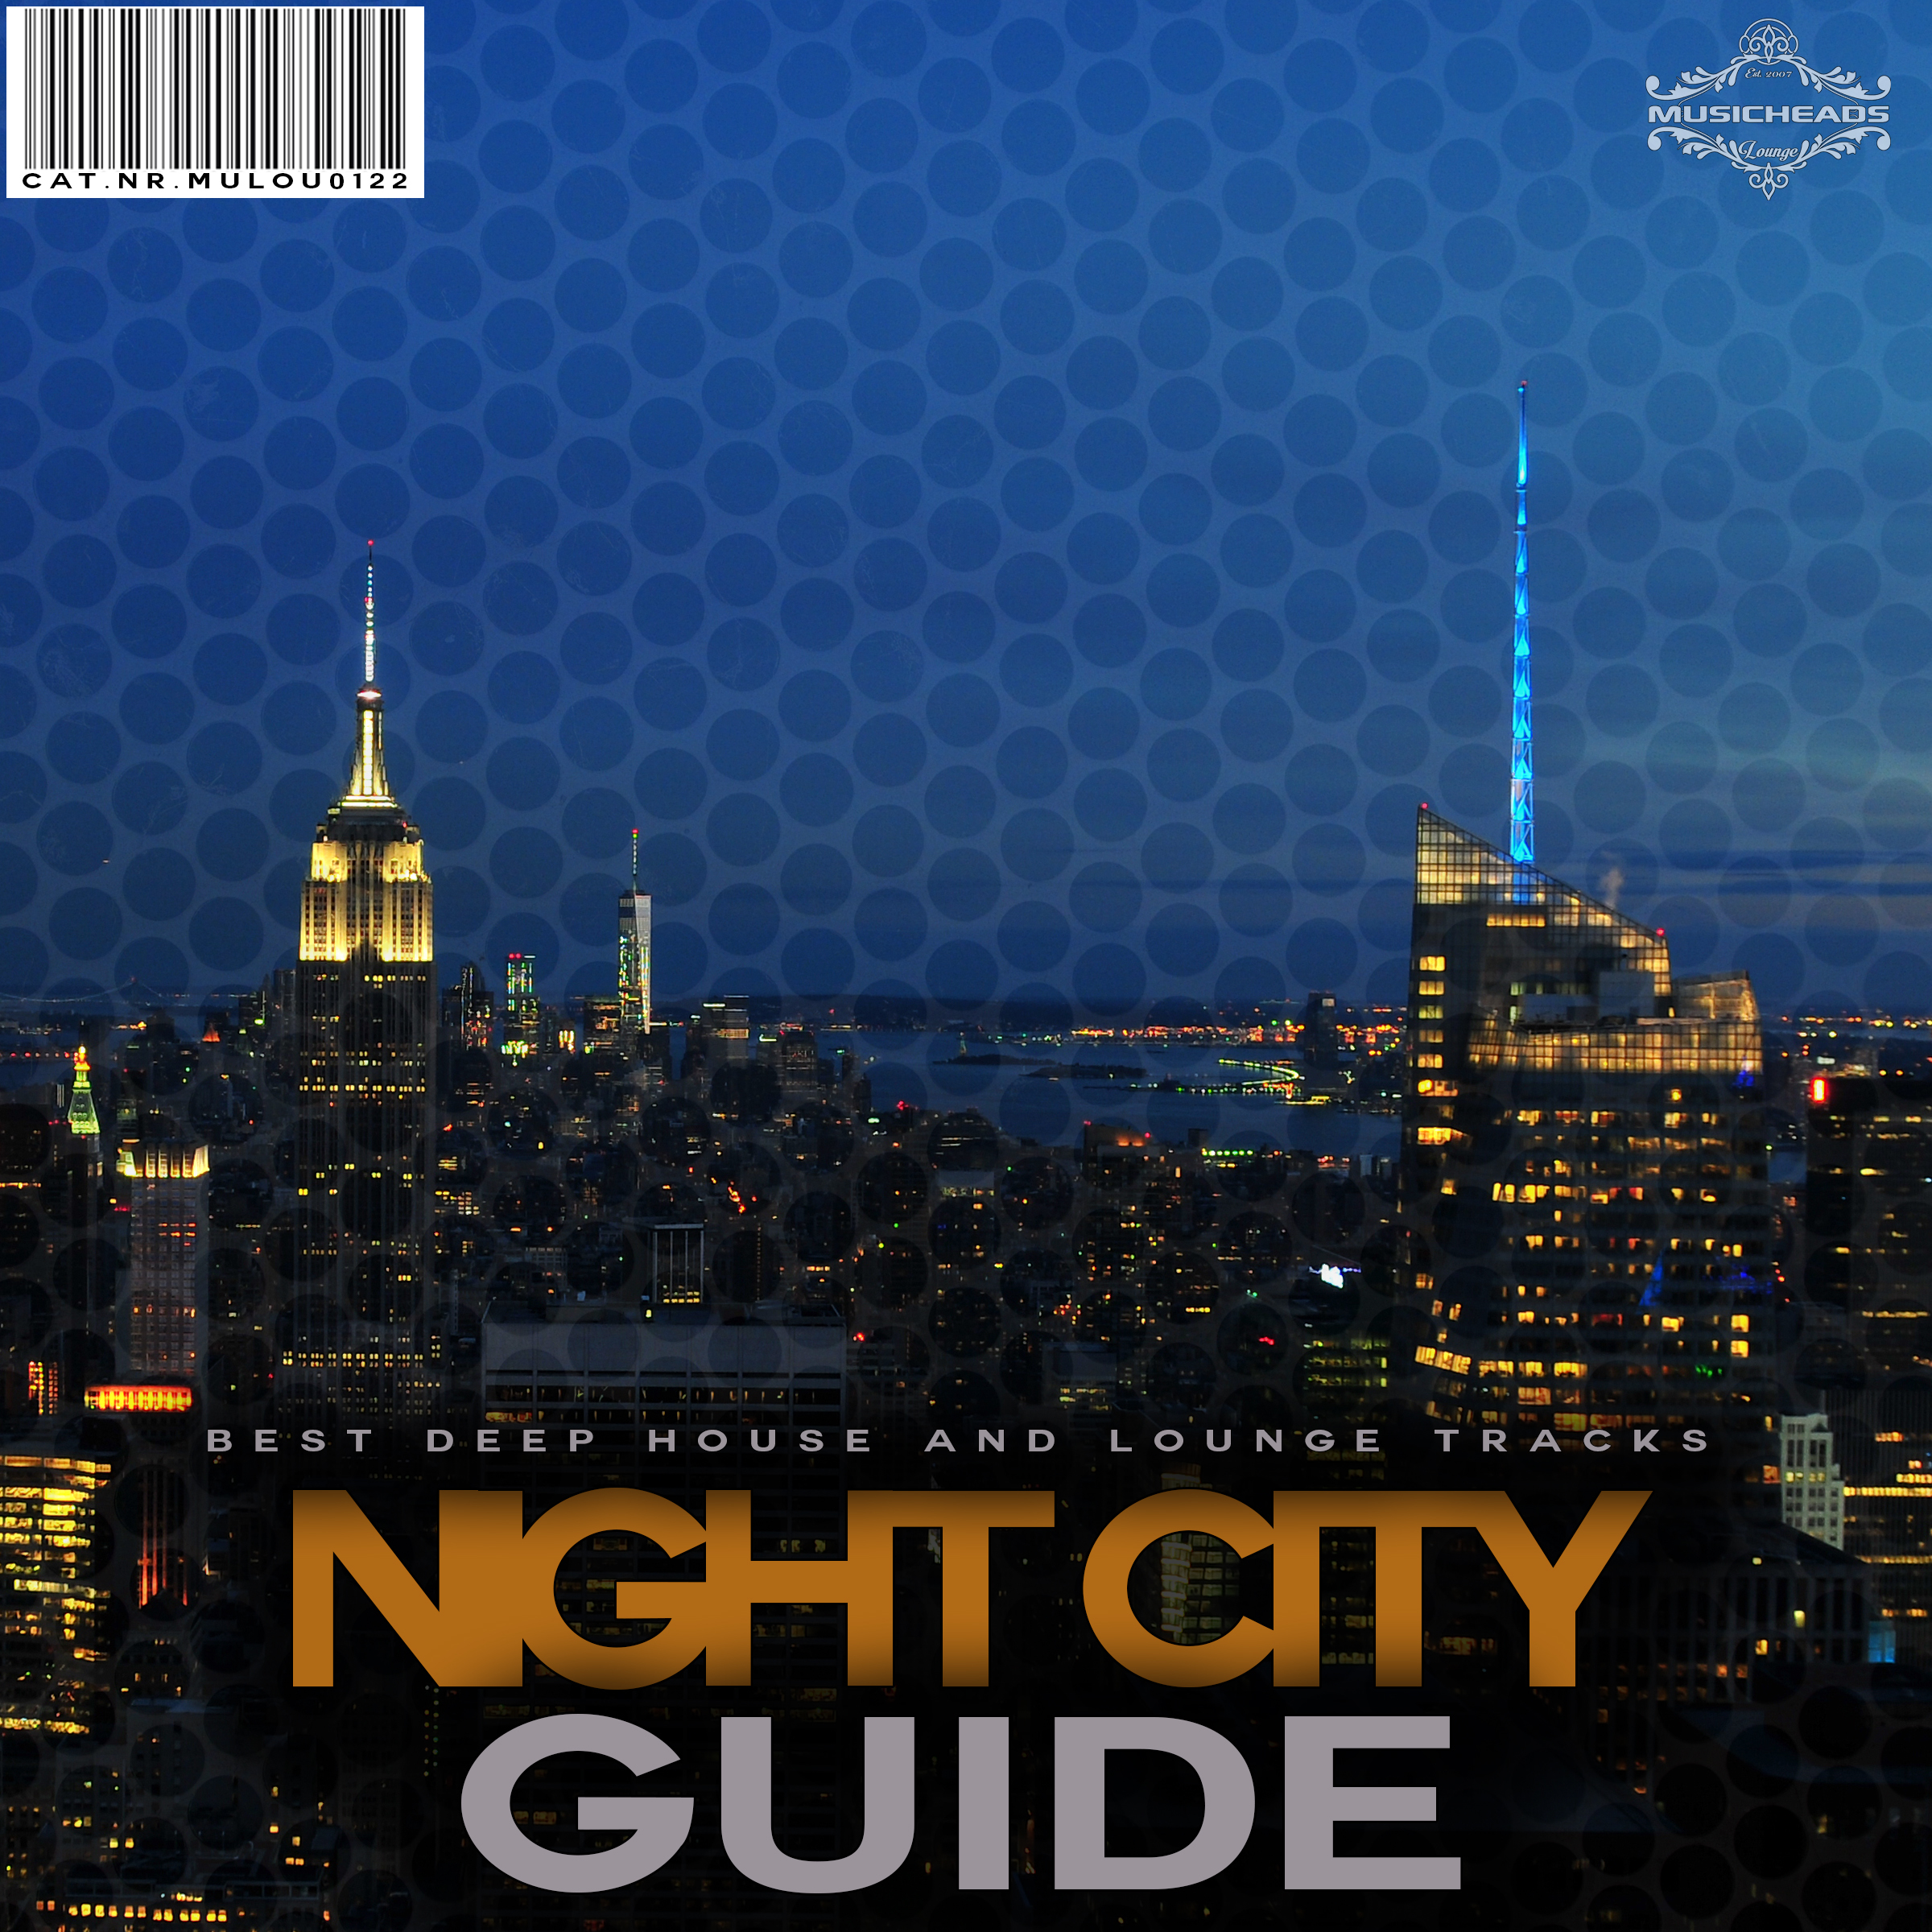 Night City Guide